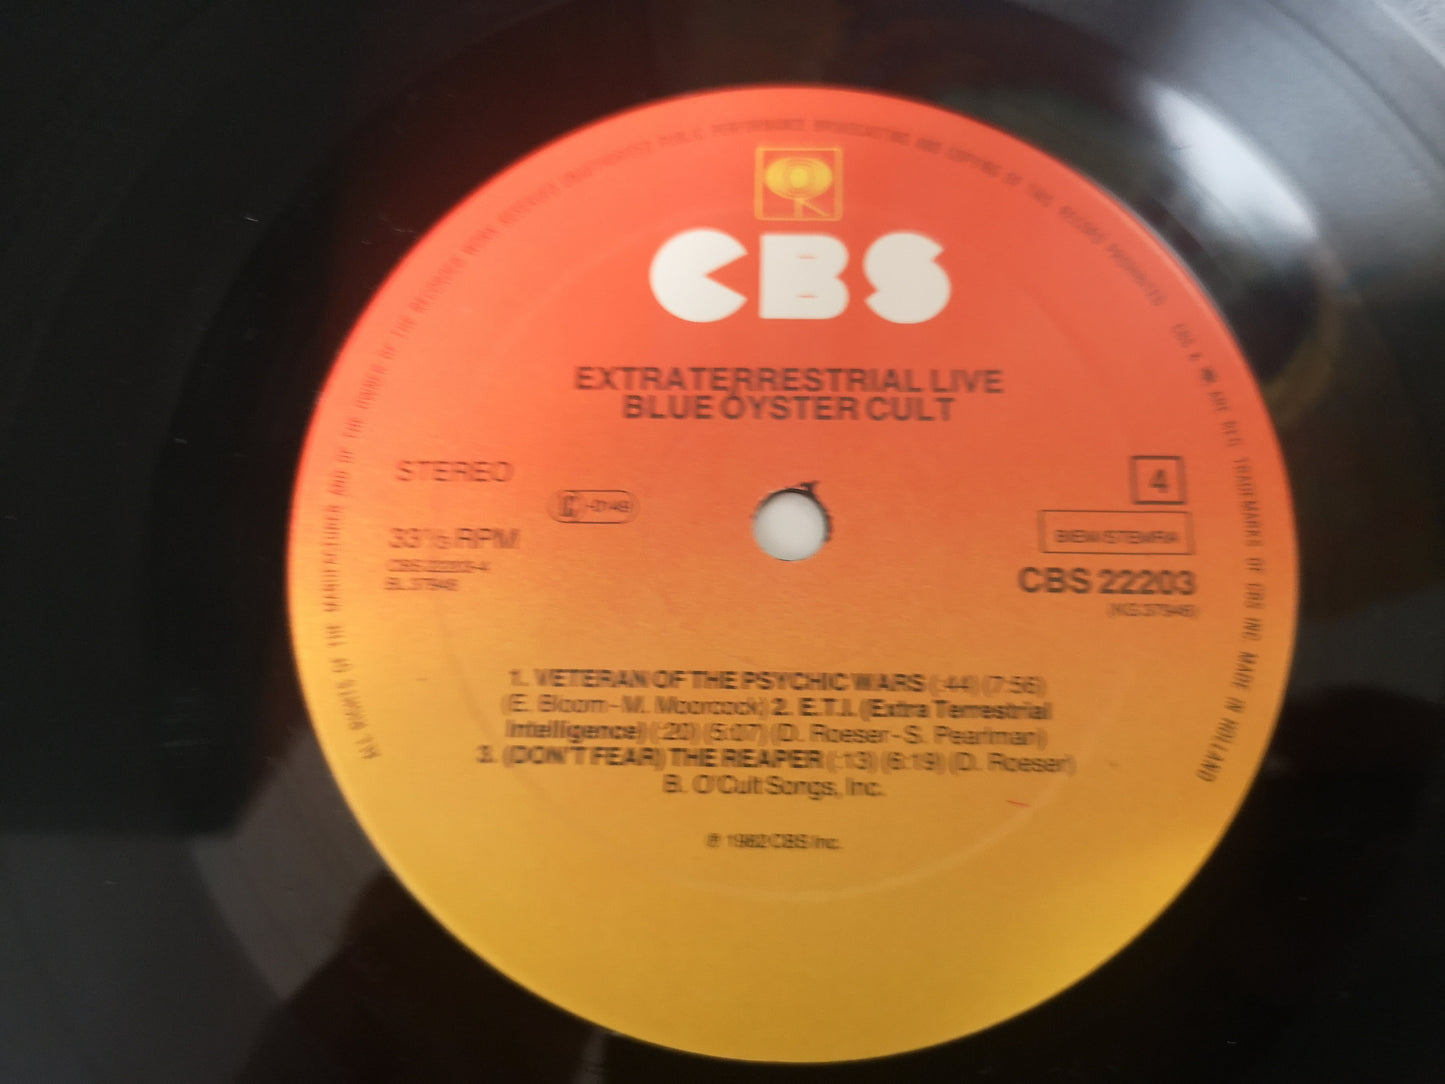 Blue Öyster Cult "Extraterrestrial Live" Orig Holland 1982 Double VG++/EX